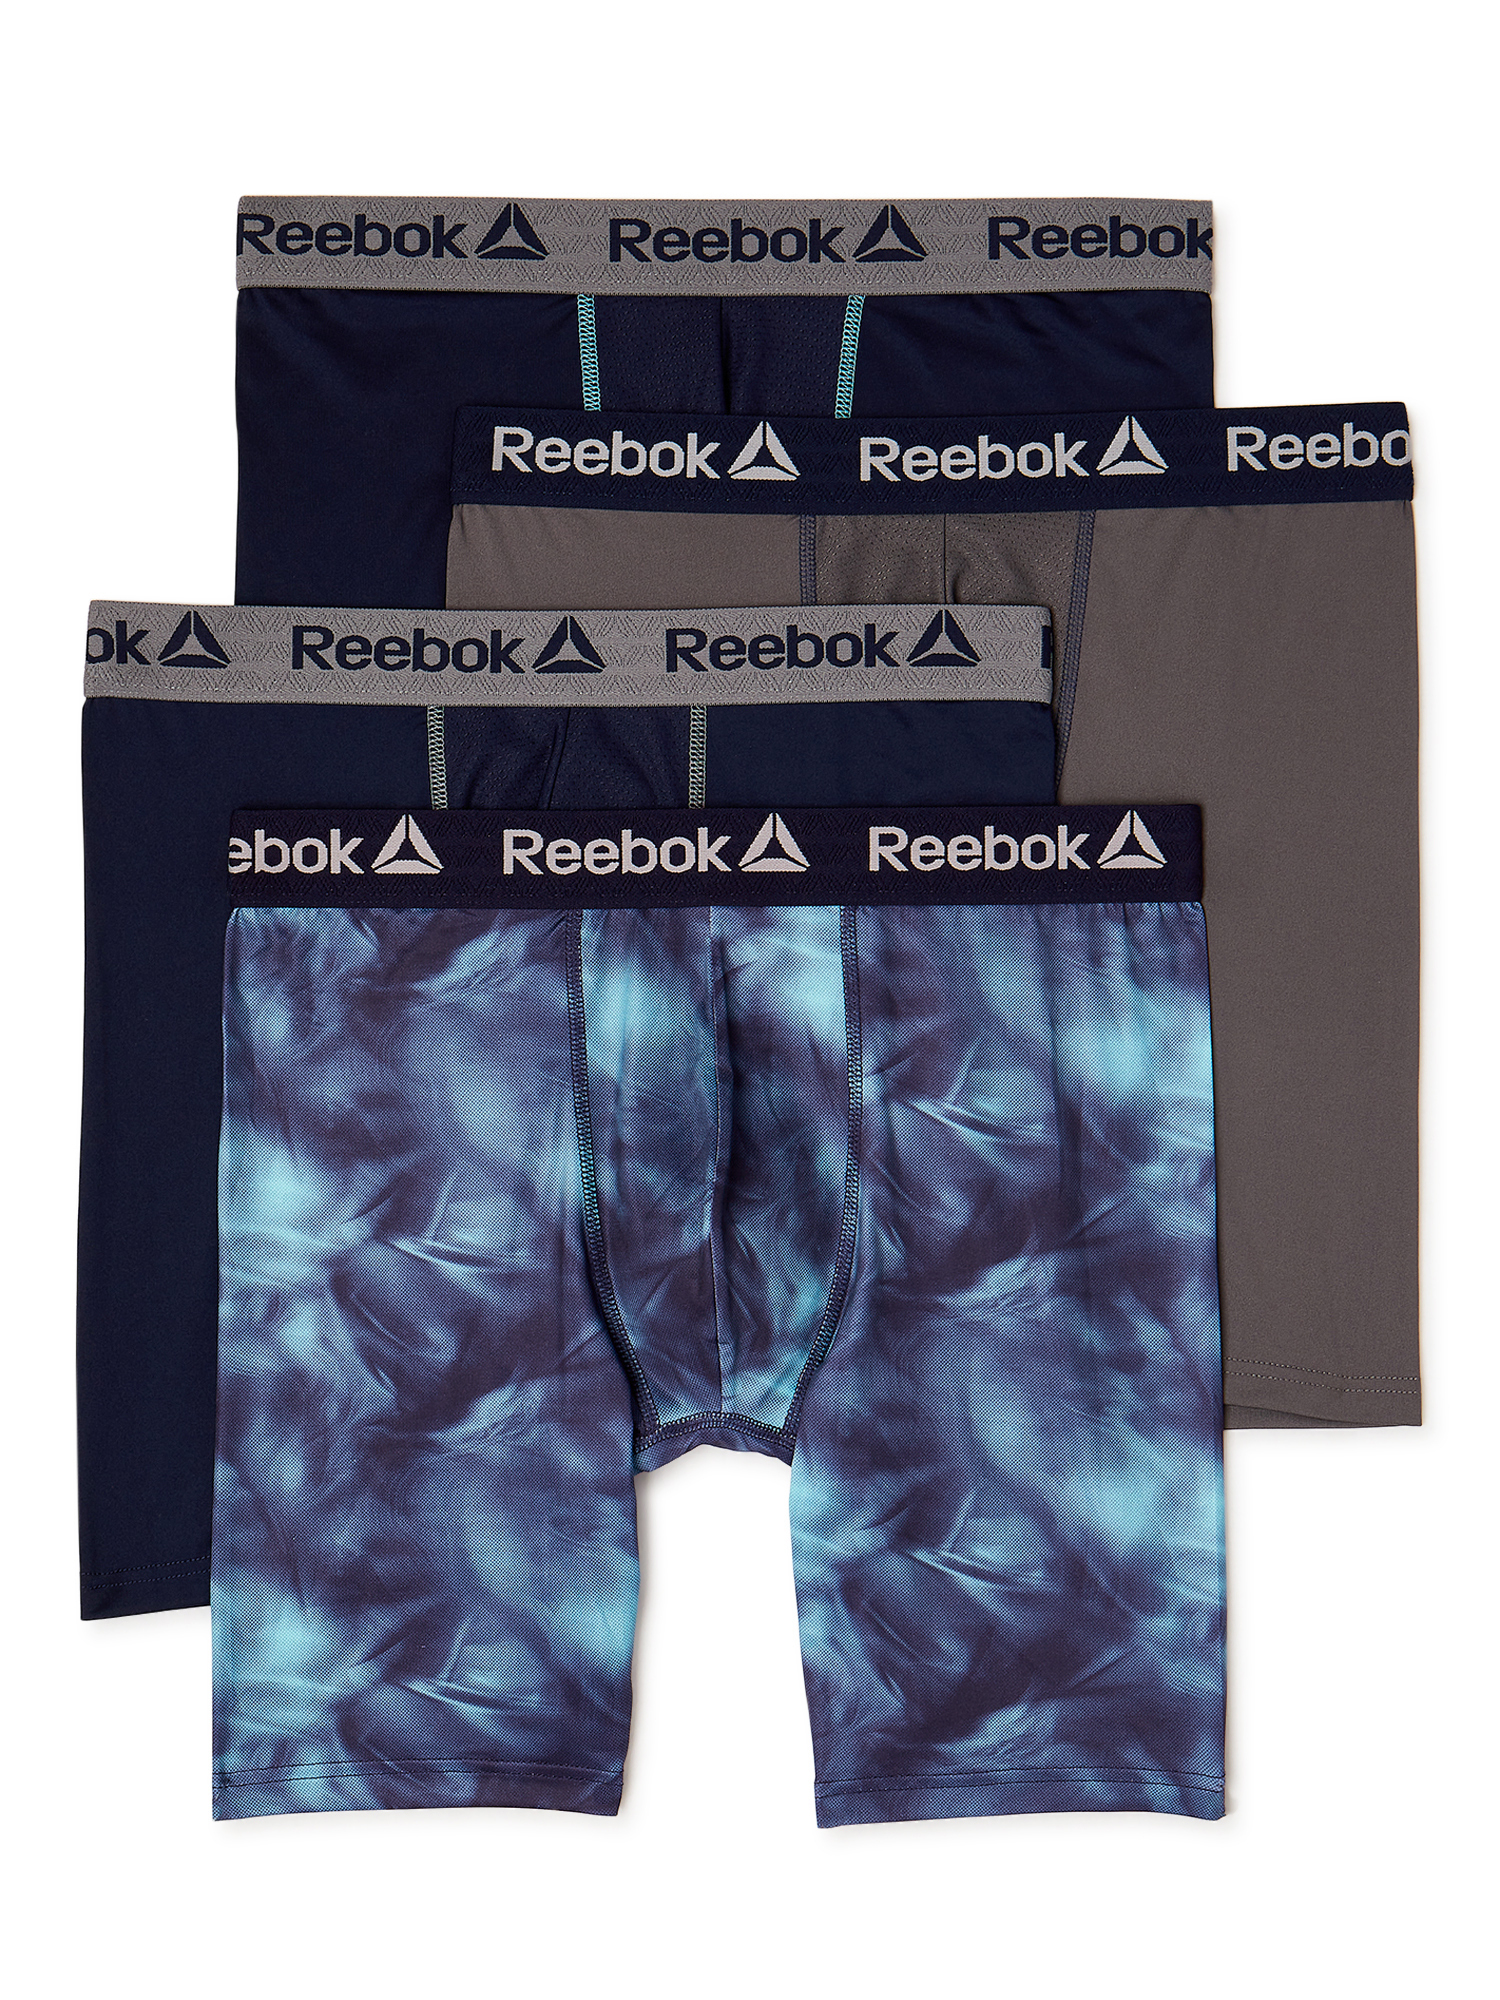 Reebok Men's Performance Mid Leg Boxer Briefs, 4-Pack - image 1 of 8